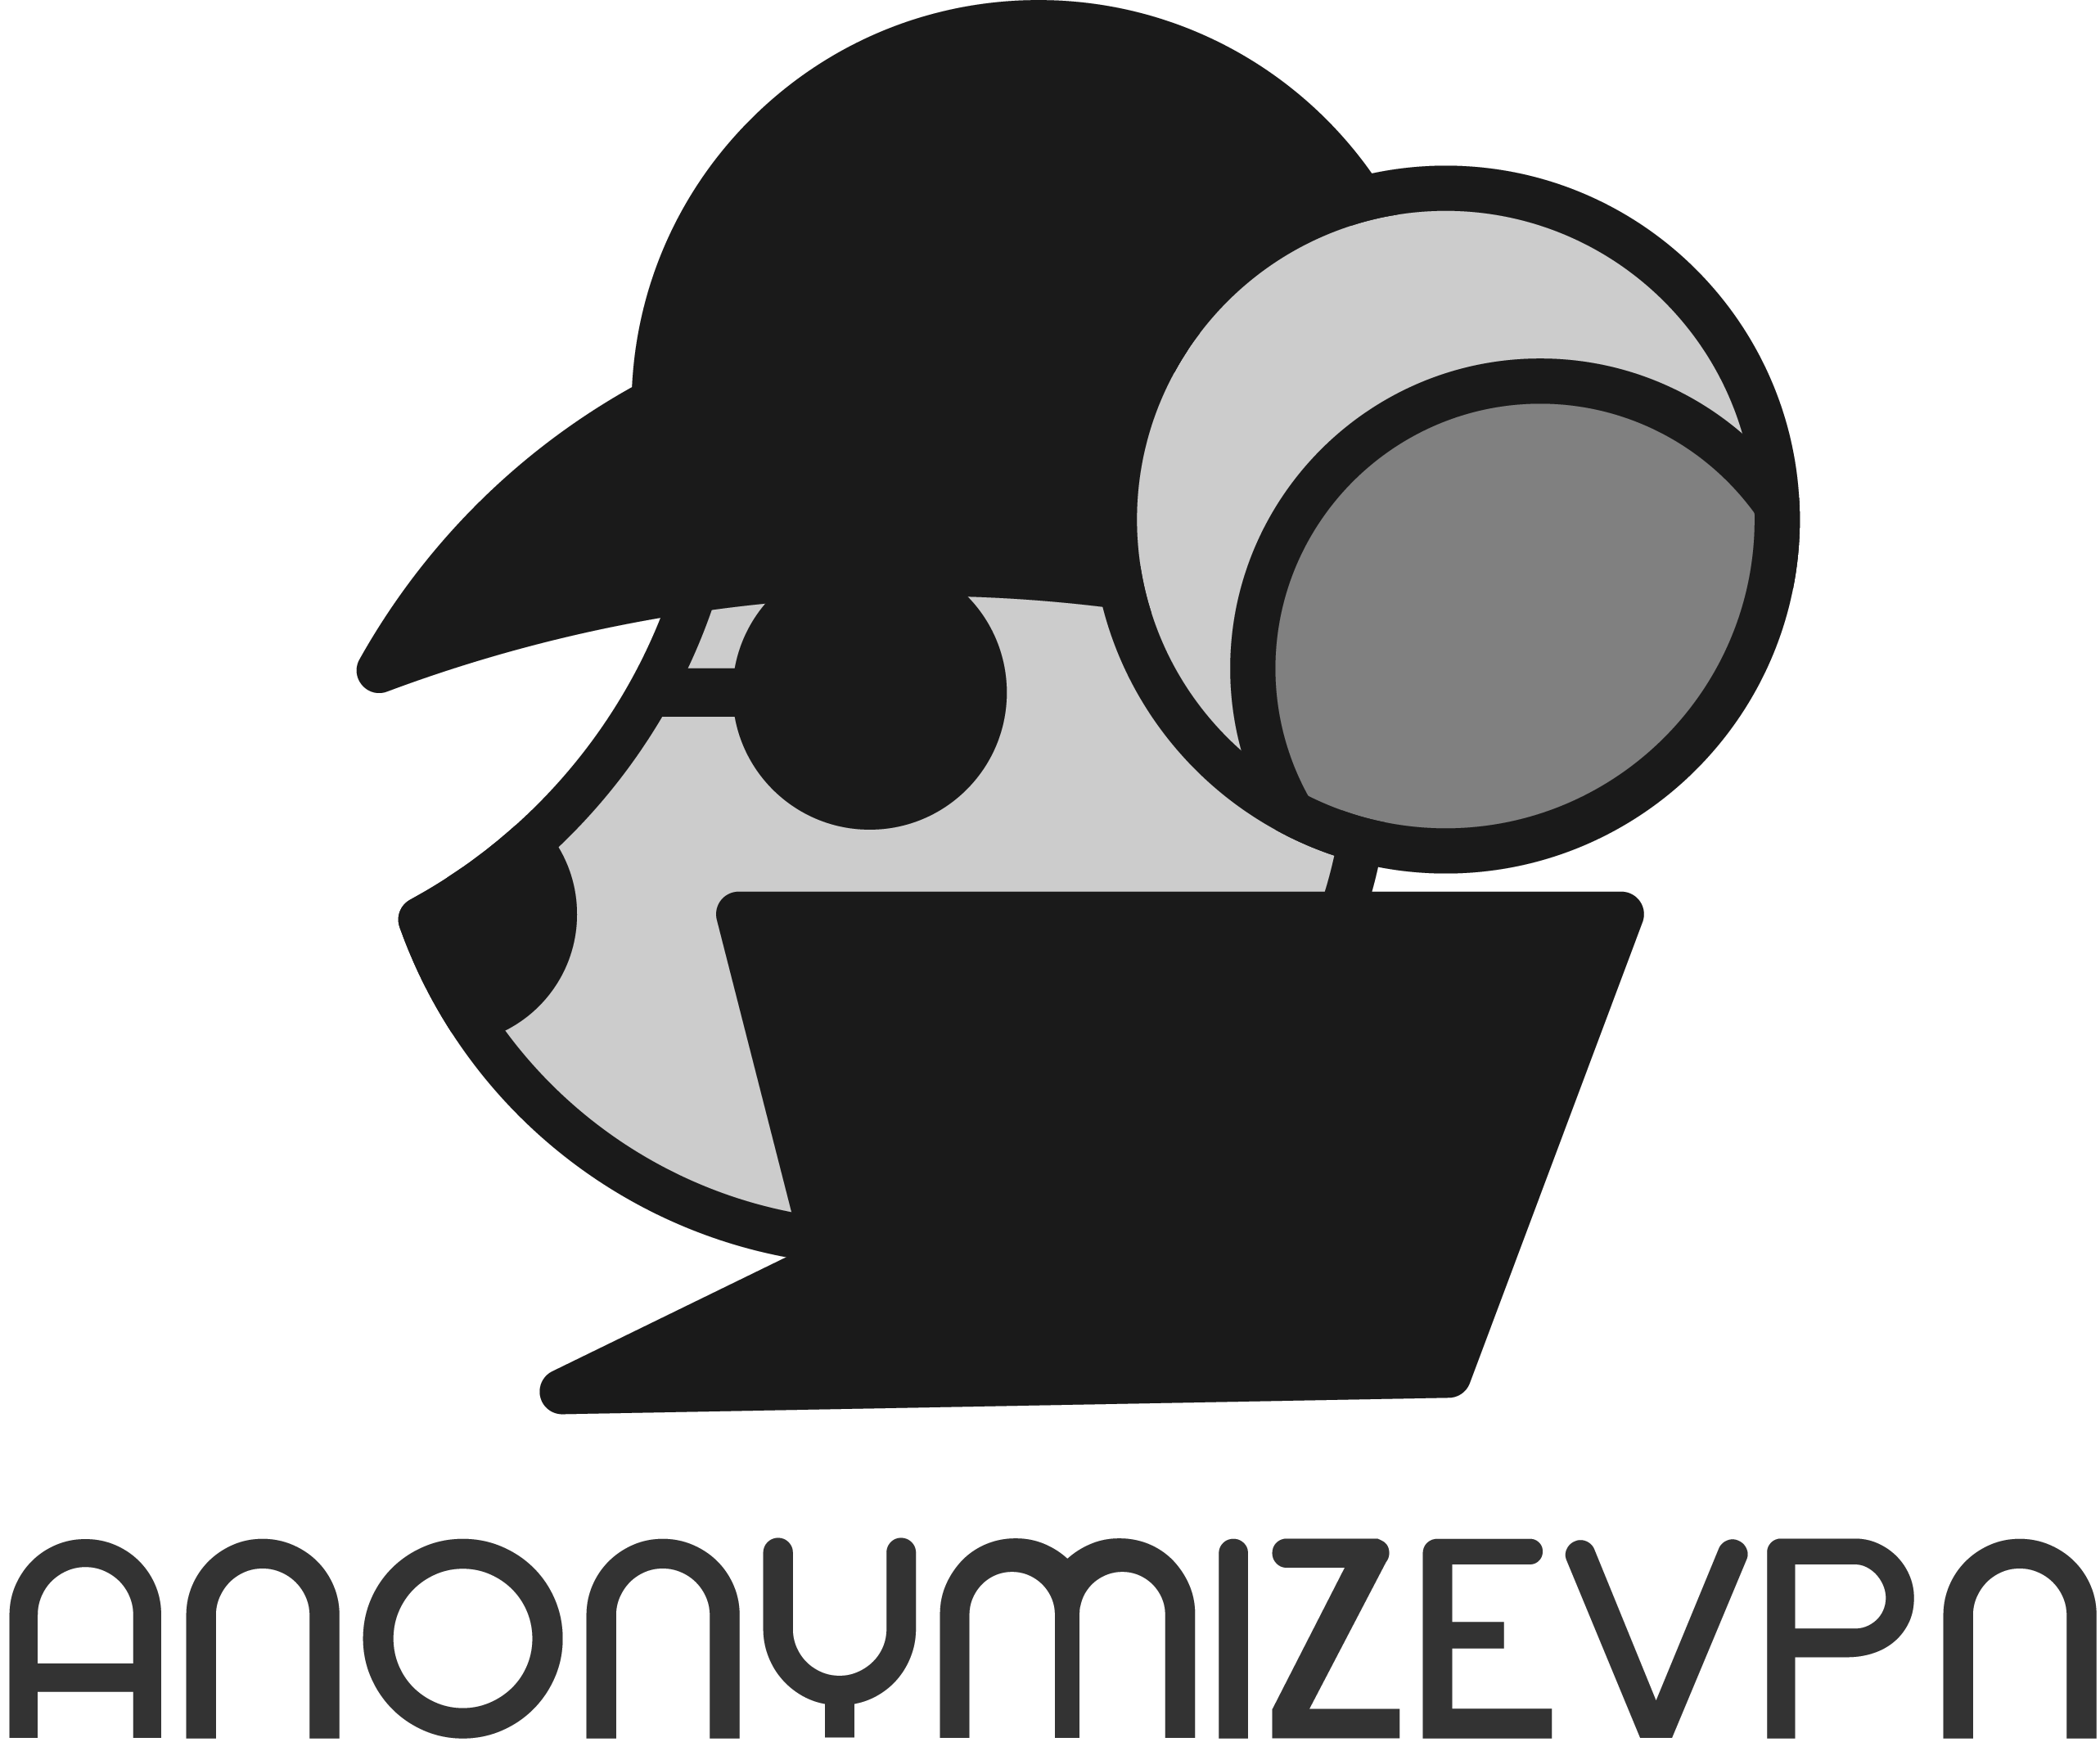 anonymizevpn.com